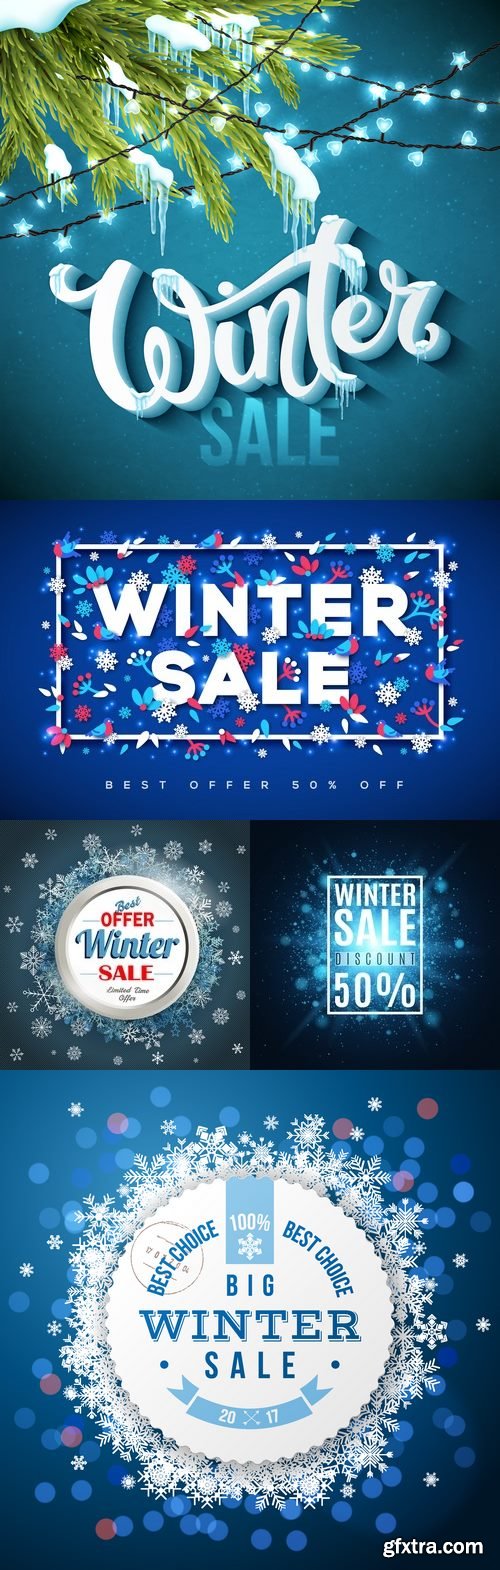 Vectors - Winter Sale Backgrounds 13